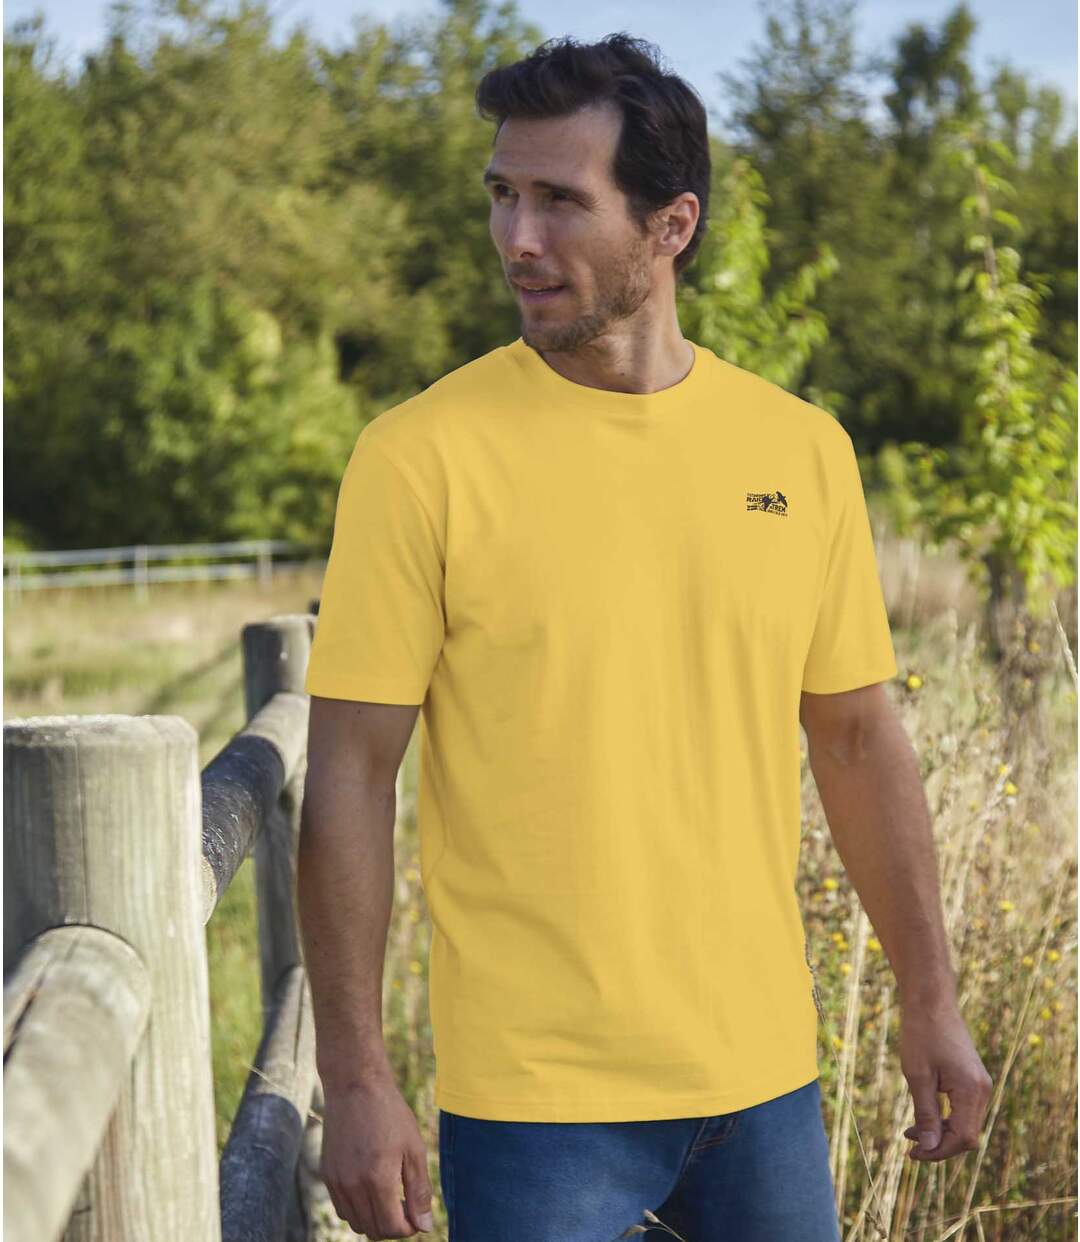 Pack of 4 Men's Casual T-Shirts - Blue Beige Yellow Khaki  Atlas For Men